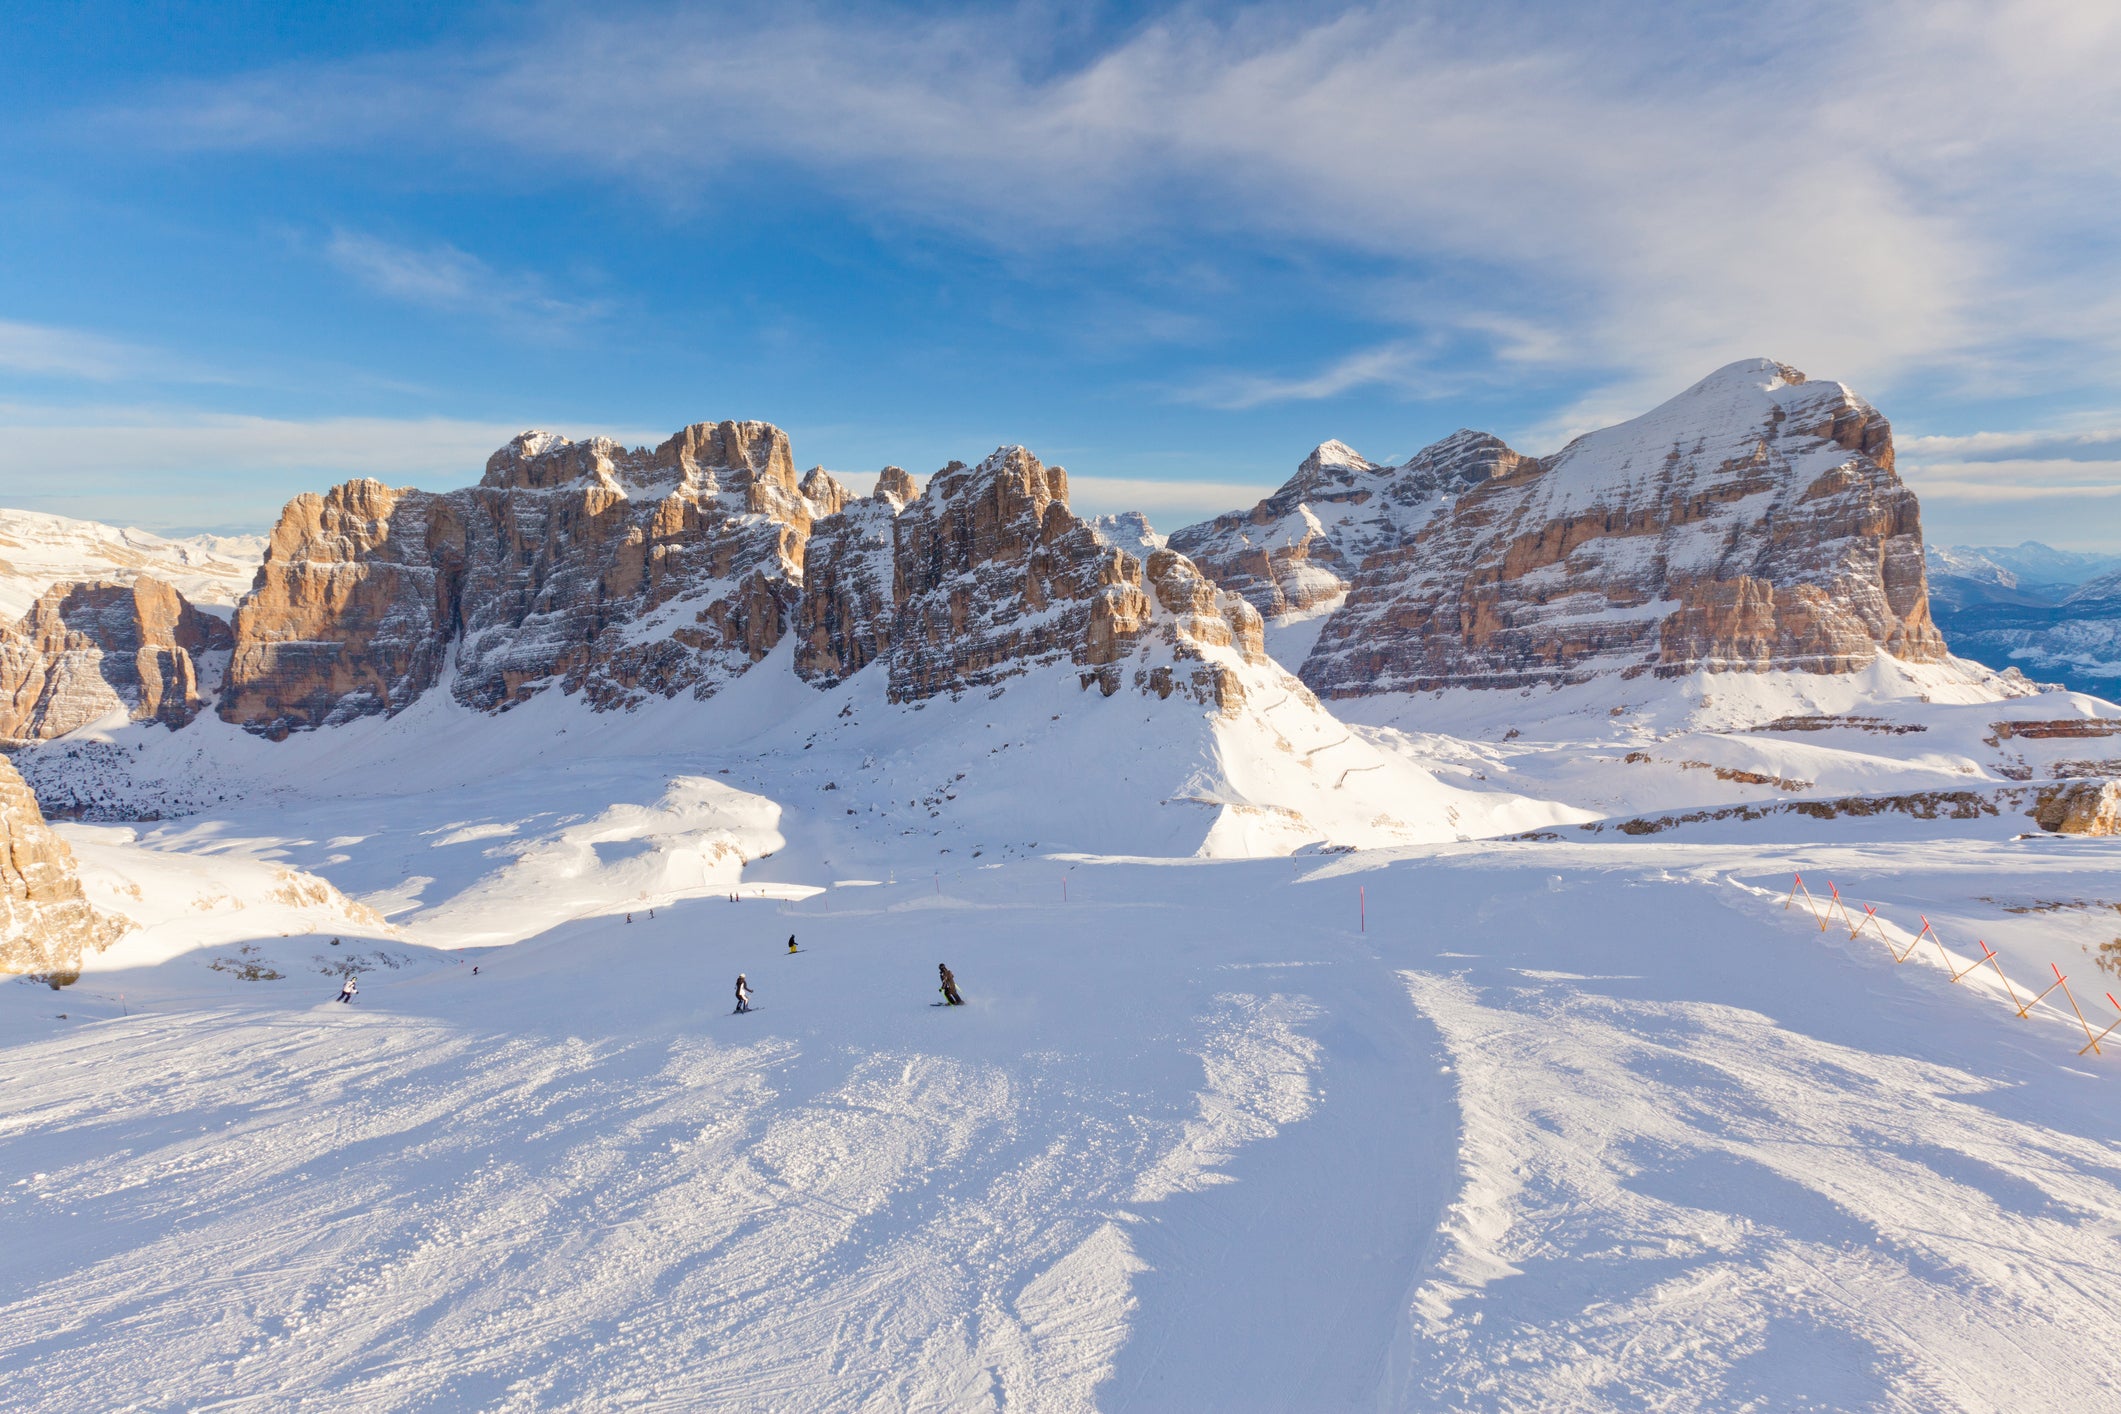 Cortina d’Ampezzo, part of the Dolomiti Superski in Italy